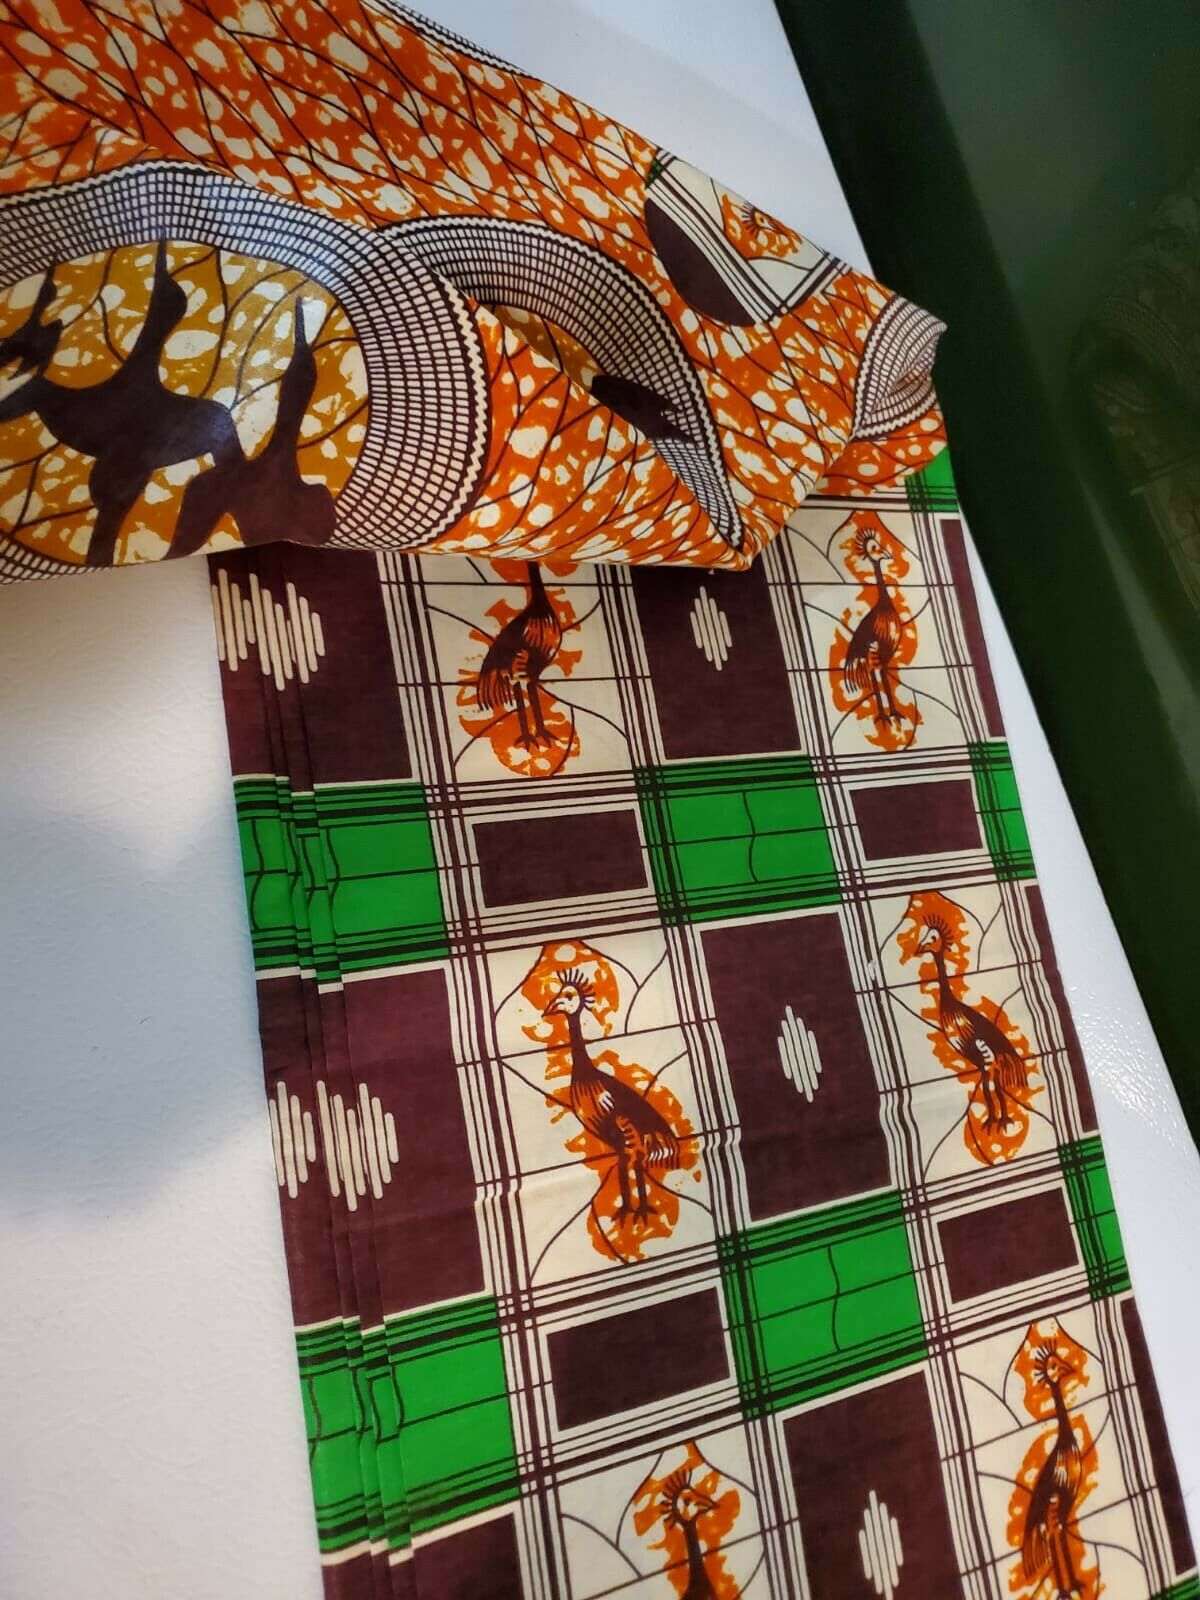 Green MultiAfrican Print(birds) 100% Cotton Fabric ~6yards×46"~$32 SALE $25!!!!